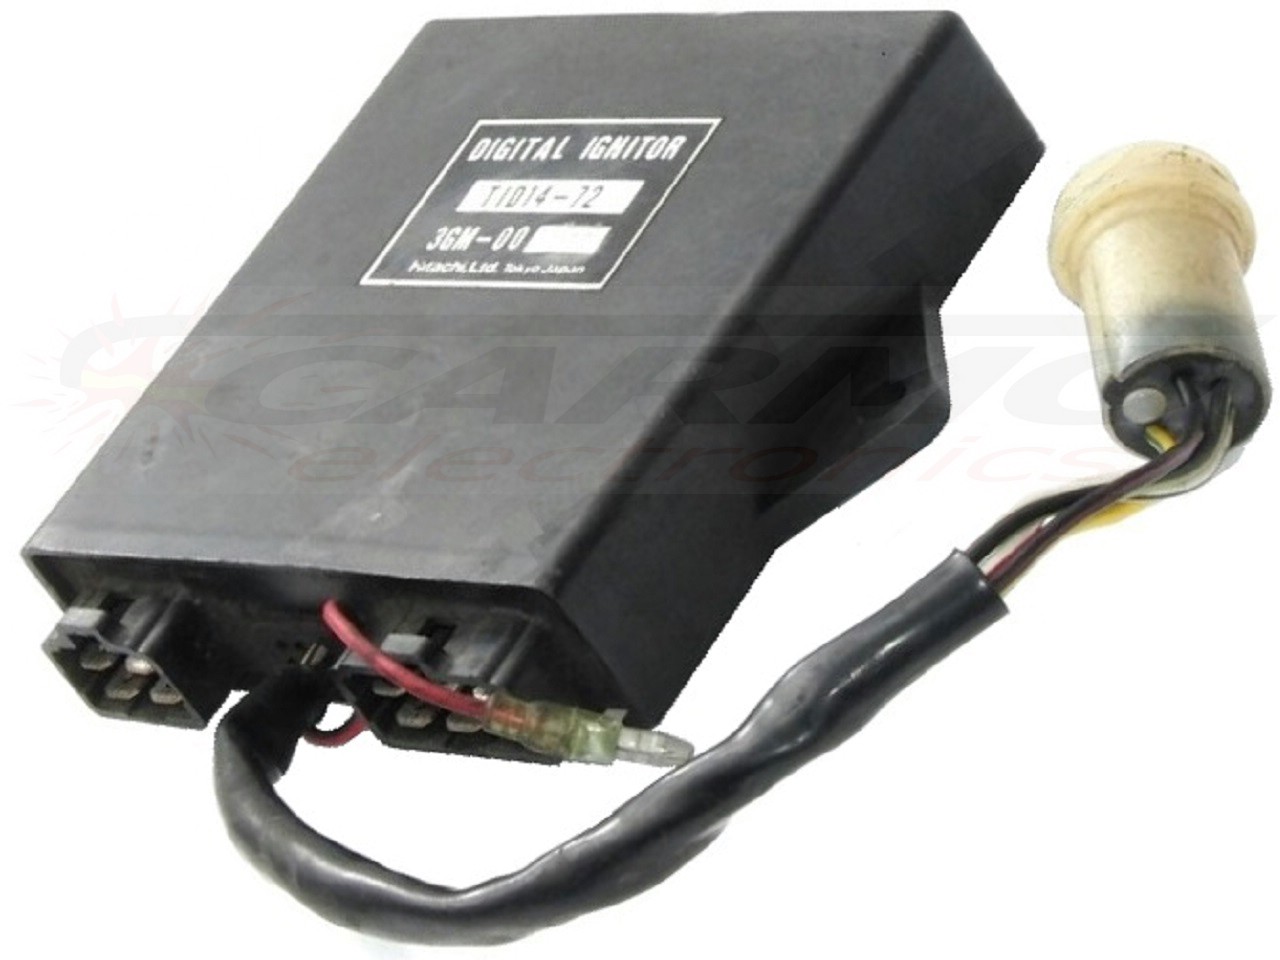 FZR1000 Exup CDI TCI igniter controller computer (TID14-72)